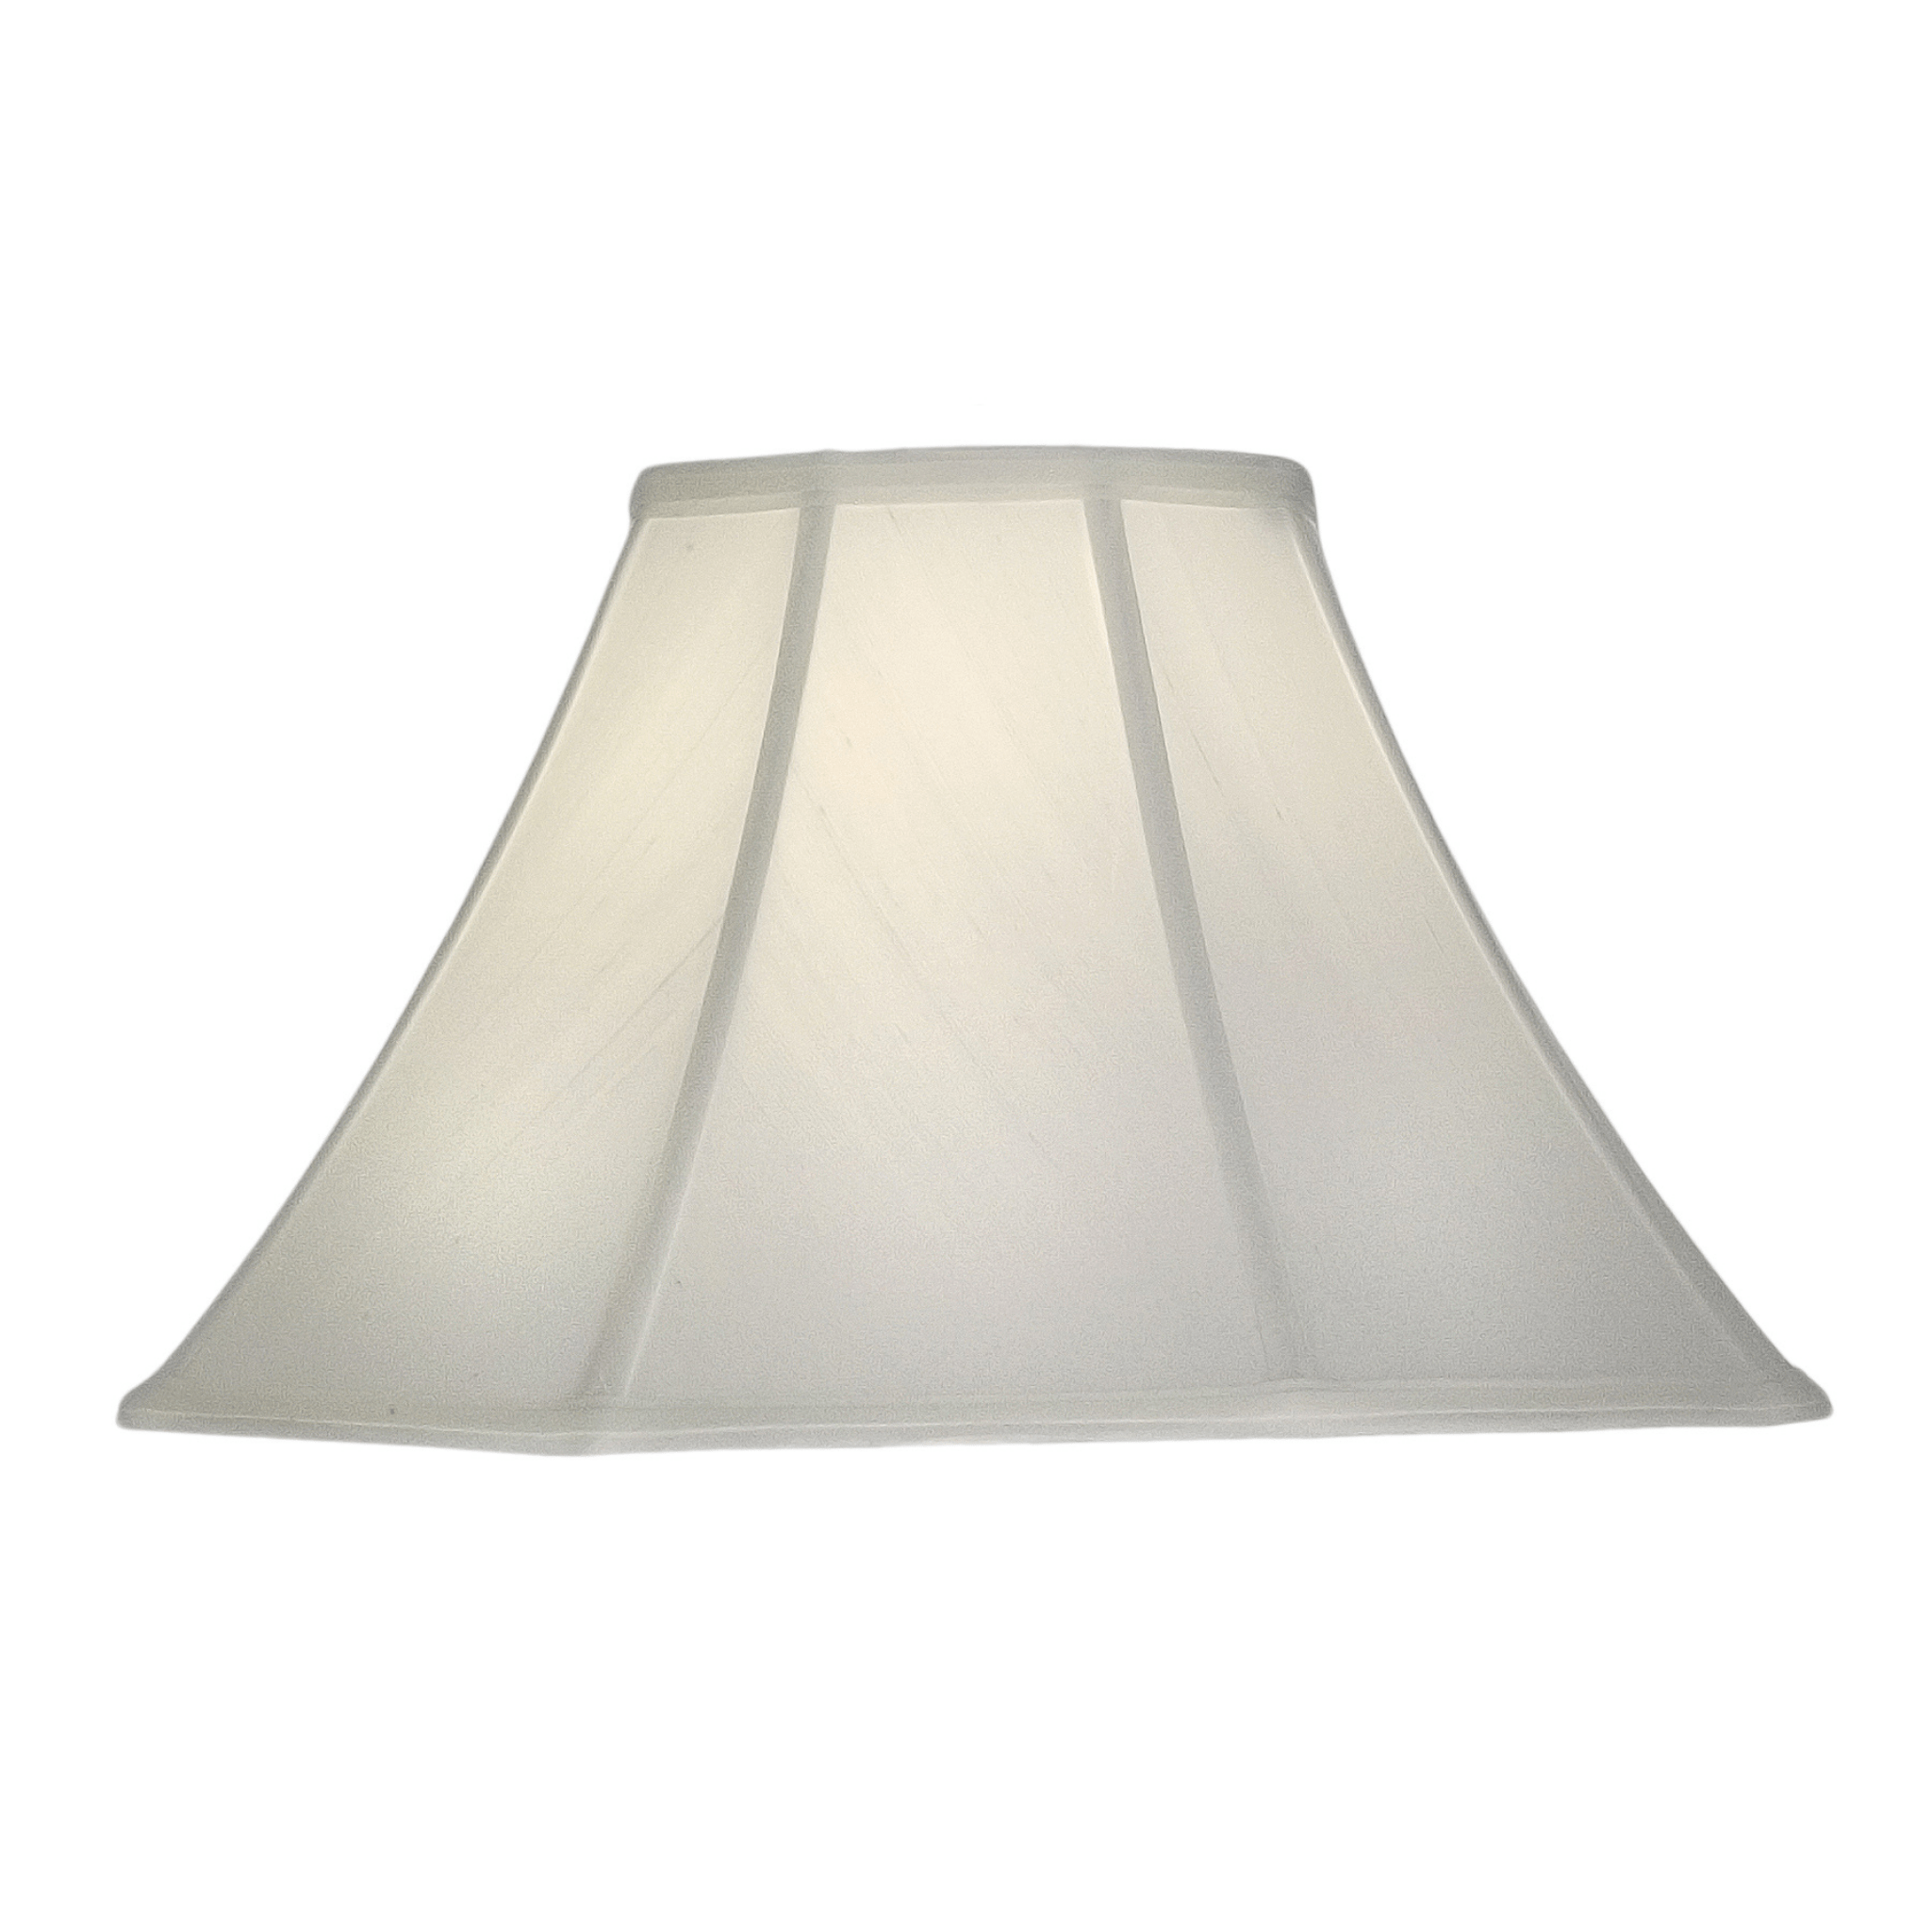 Stiffel lamp shade Off White Stiffel Off White Softback Bell Silk Shantung Lamp shade - 7” x 18” x 11.5"